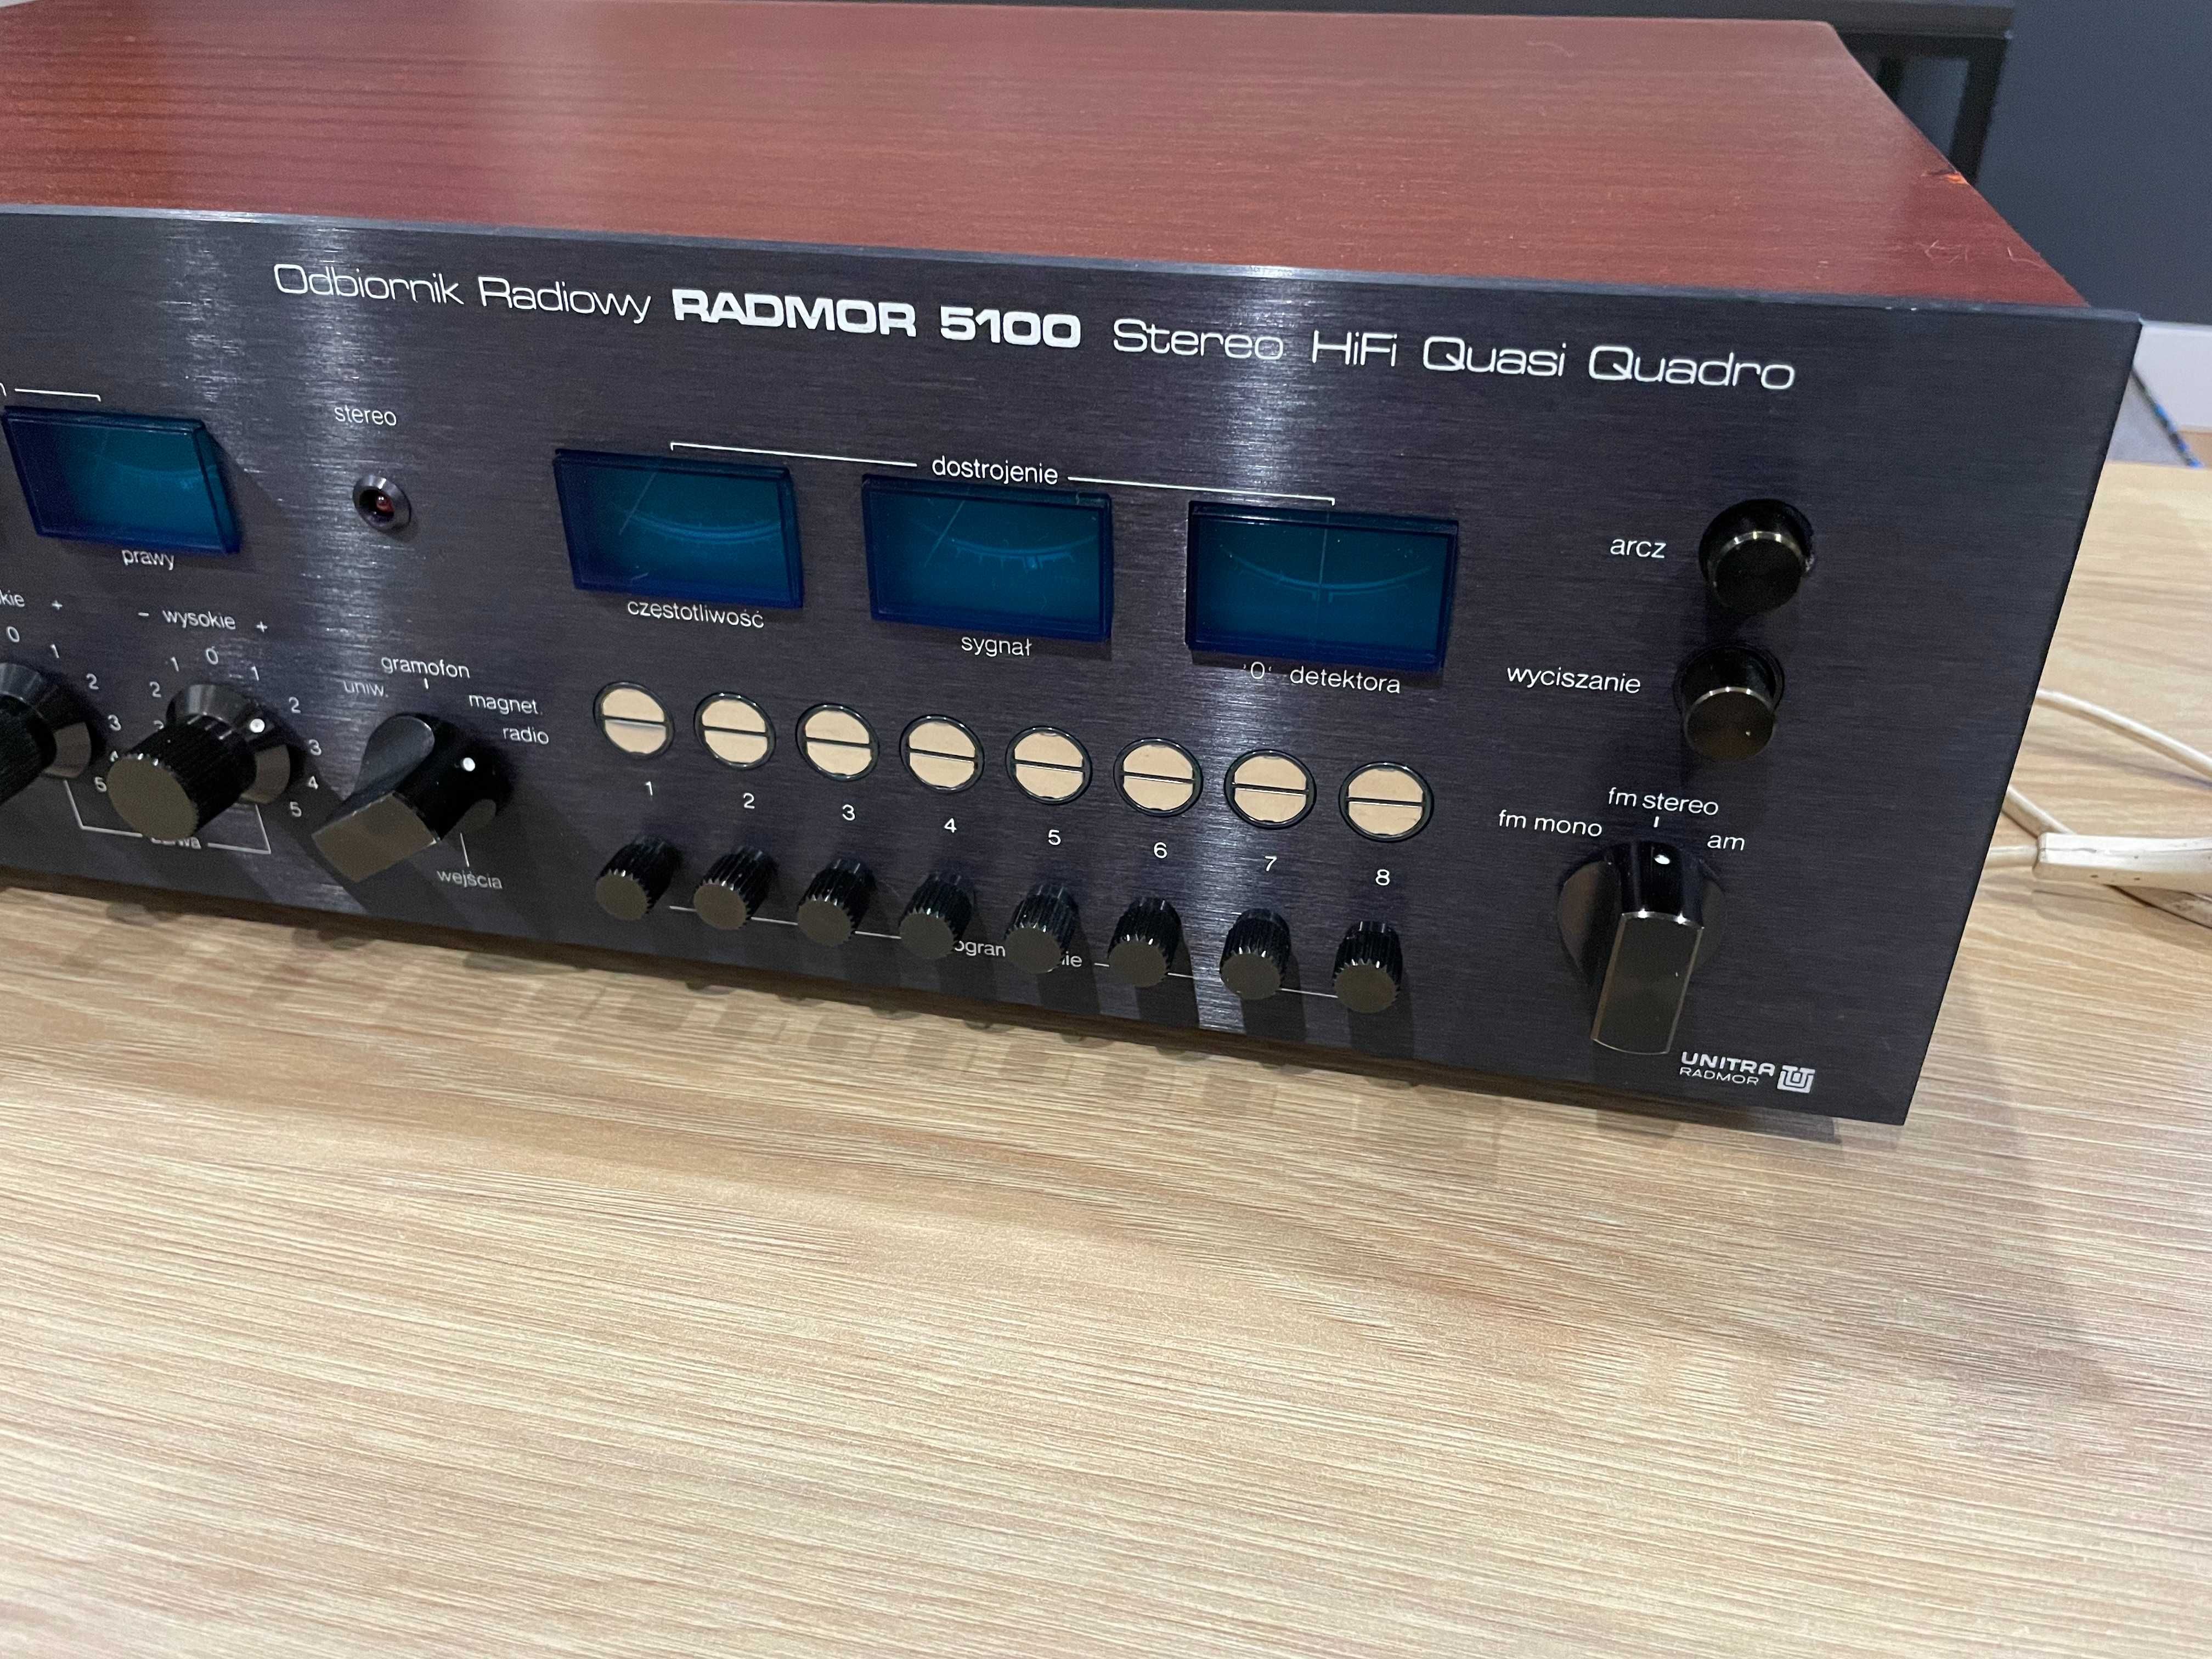 Amplituiner RADMOR 5100 - po serwisie RADMOR GDYNIA